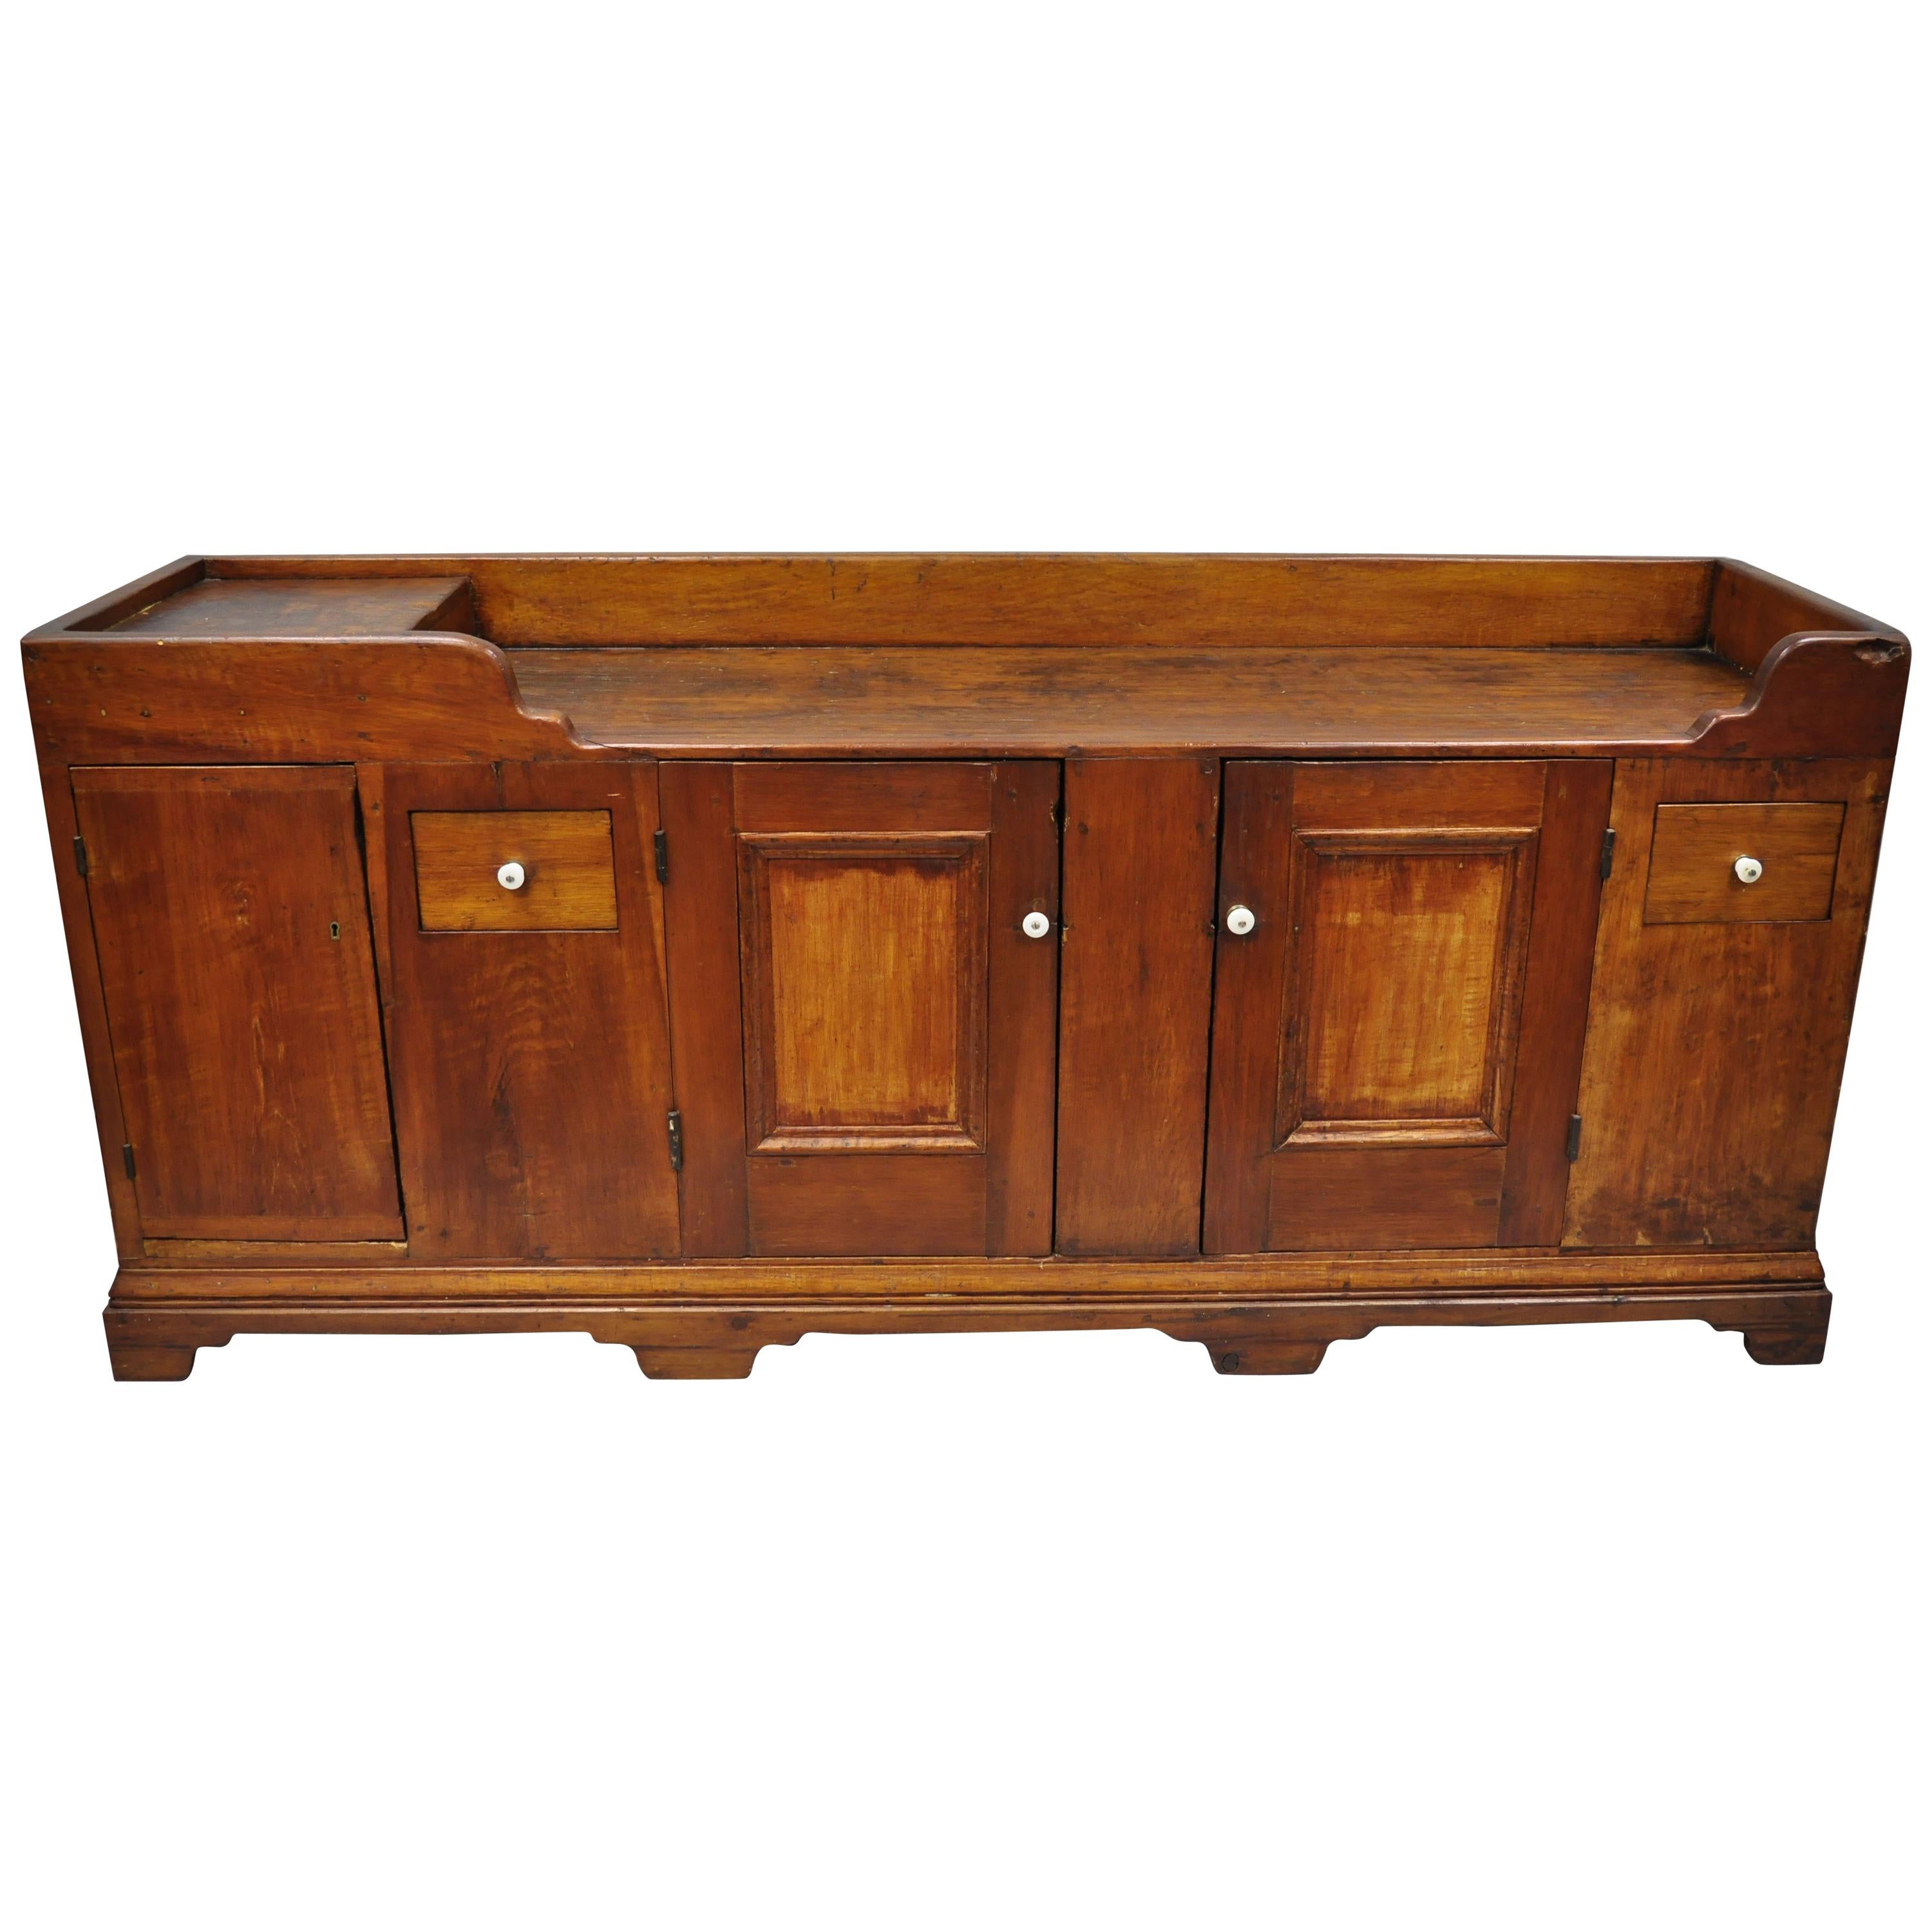 19th Century Pine Wood Primitive Long Dry Sink Cupboard Cabinet Sideboard Buffet